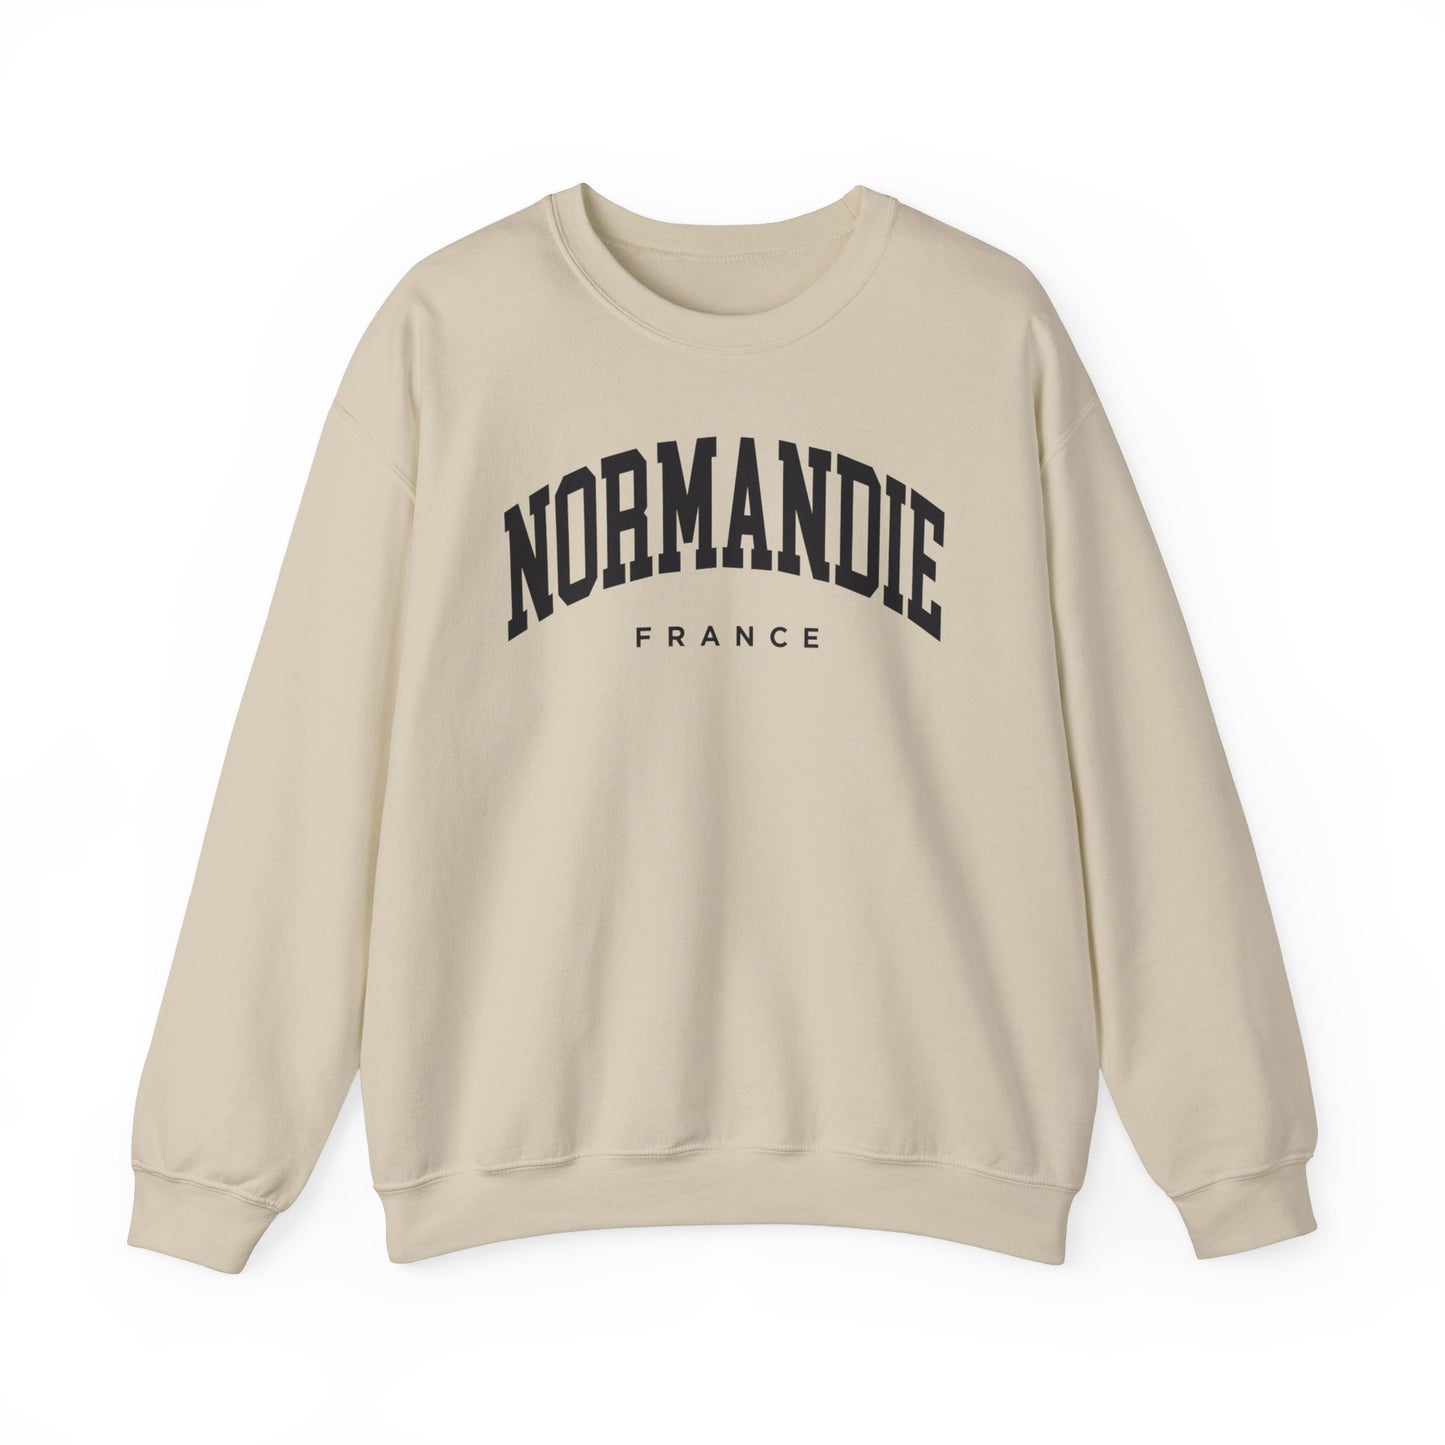 Normandy France Sweatshirt